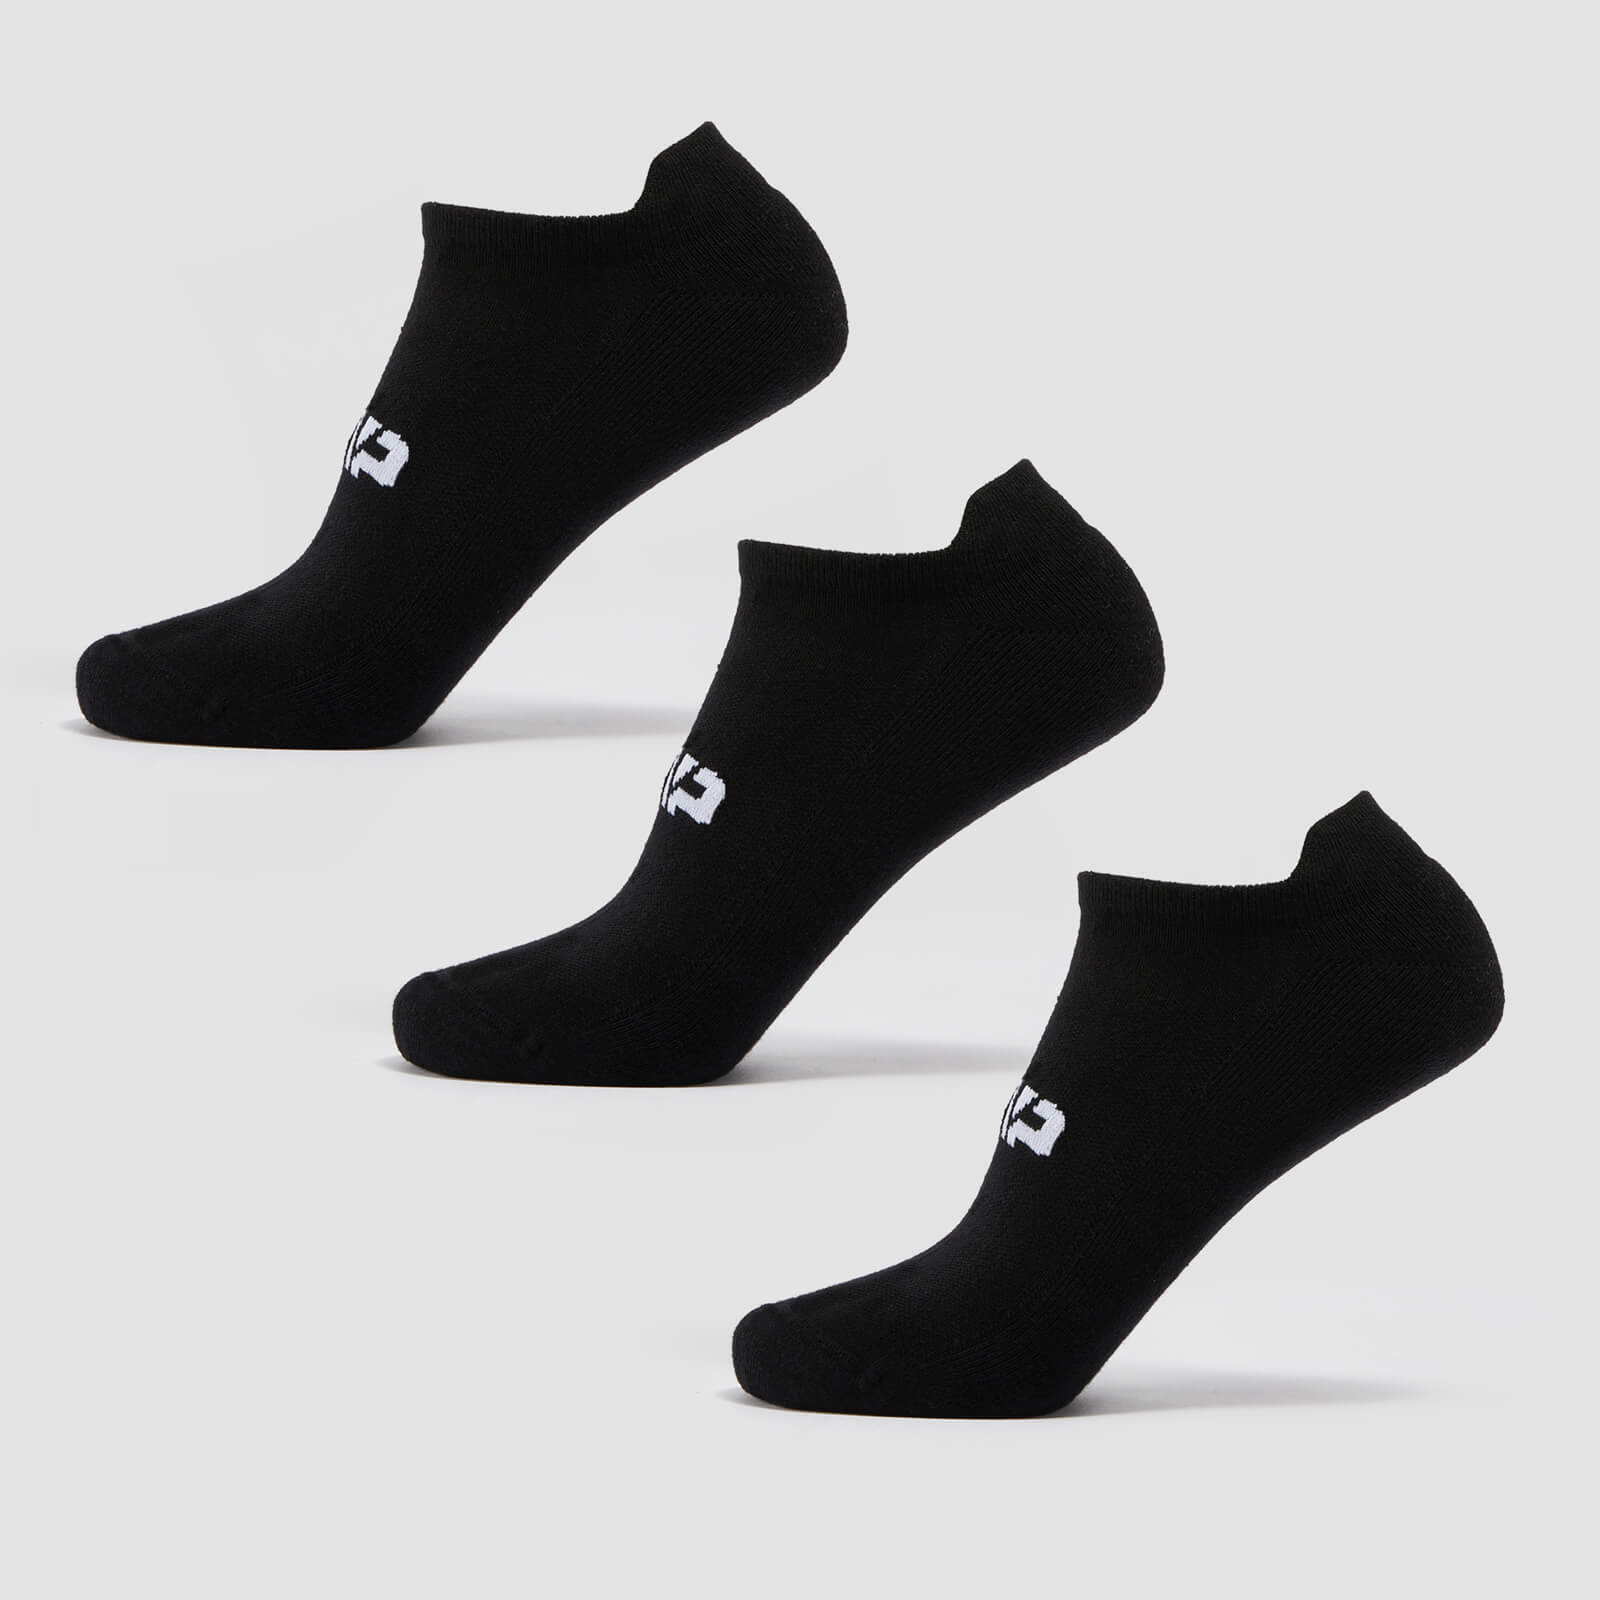 Tất Unisex Trainer Socks của MP (3 gói) - Màu đen